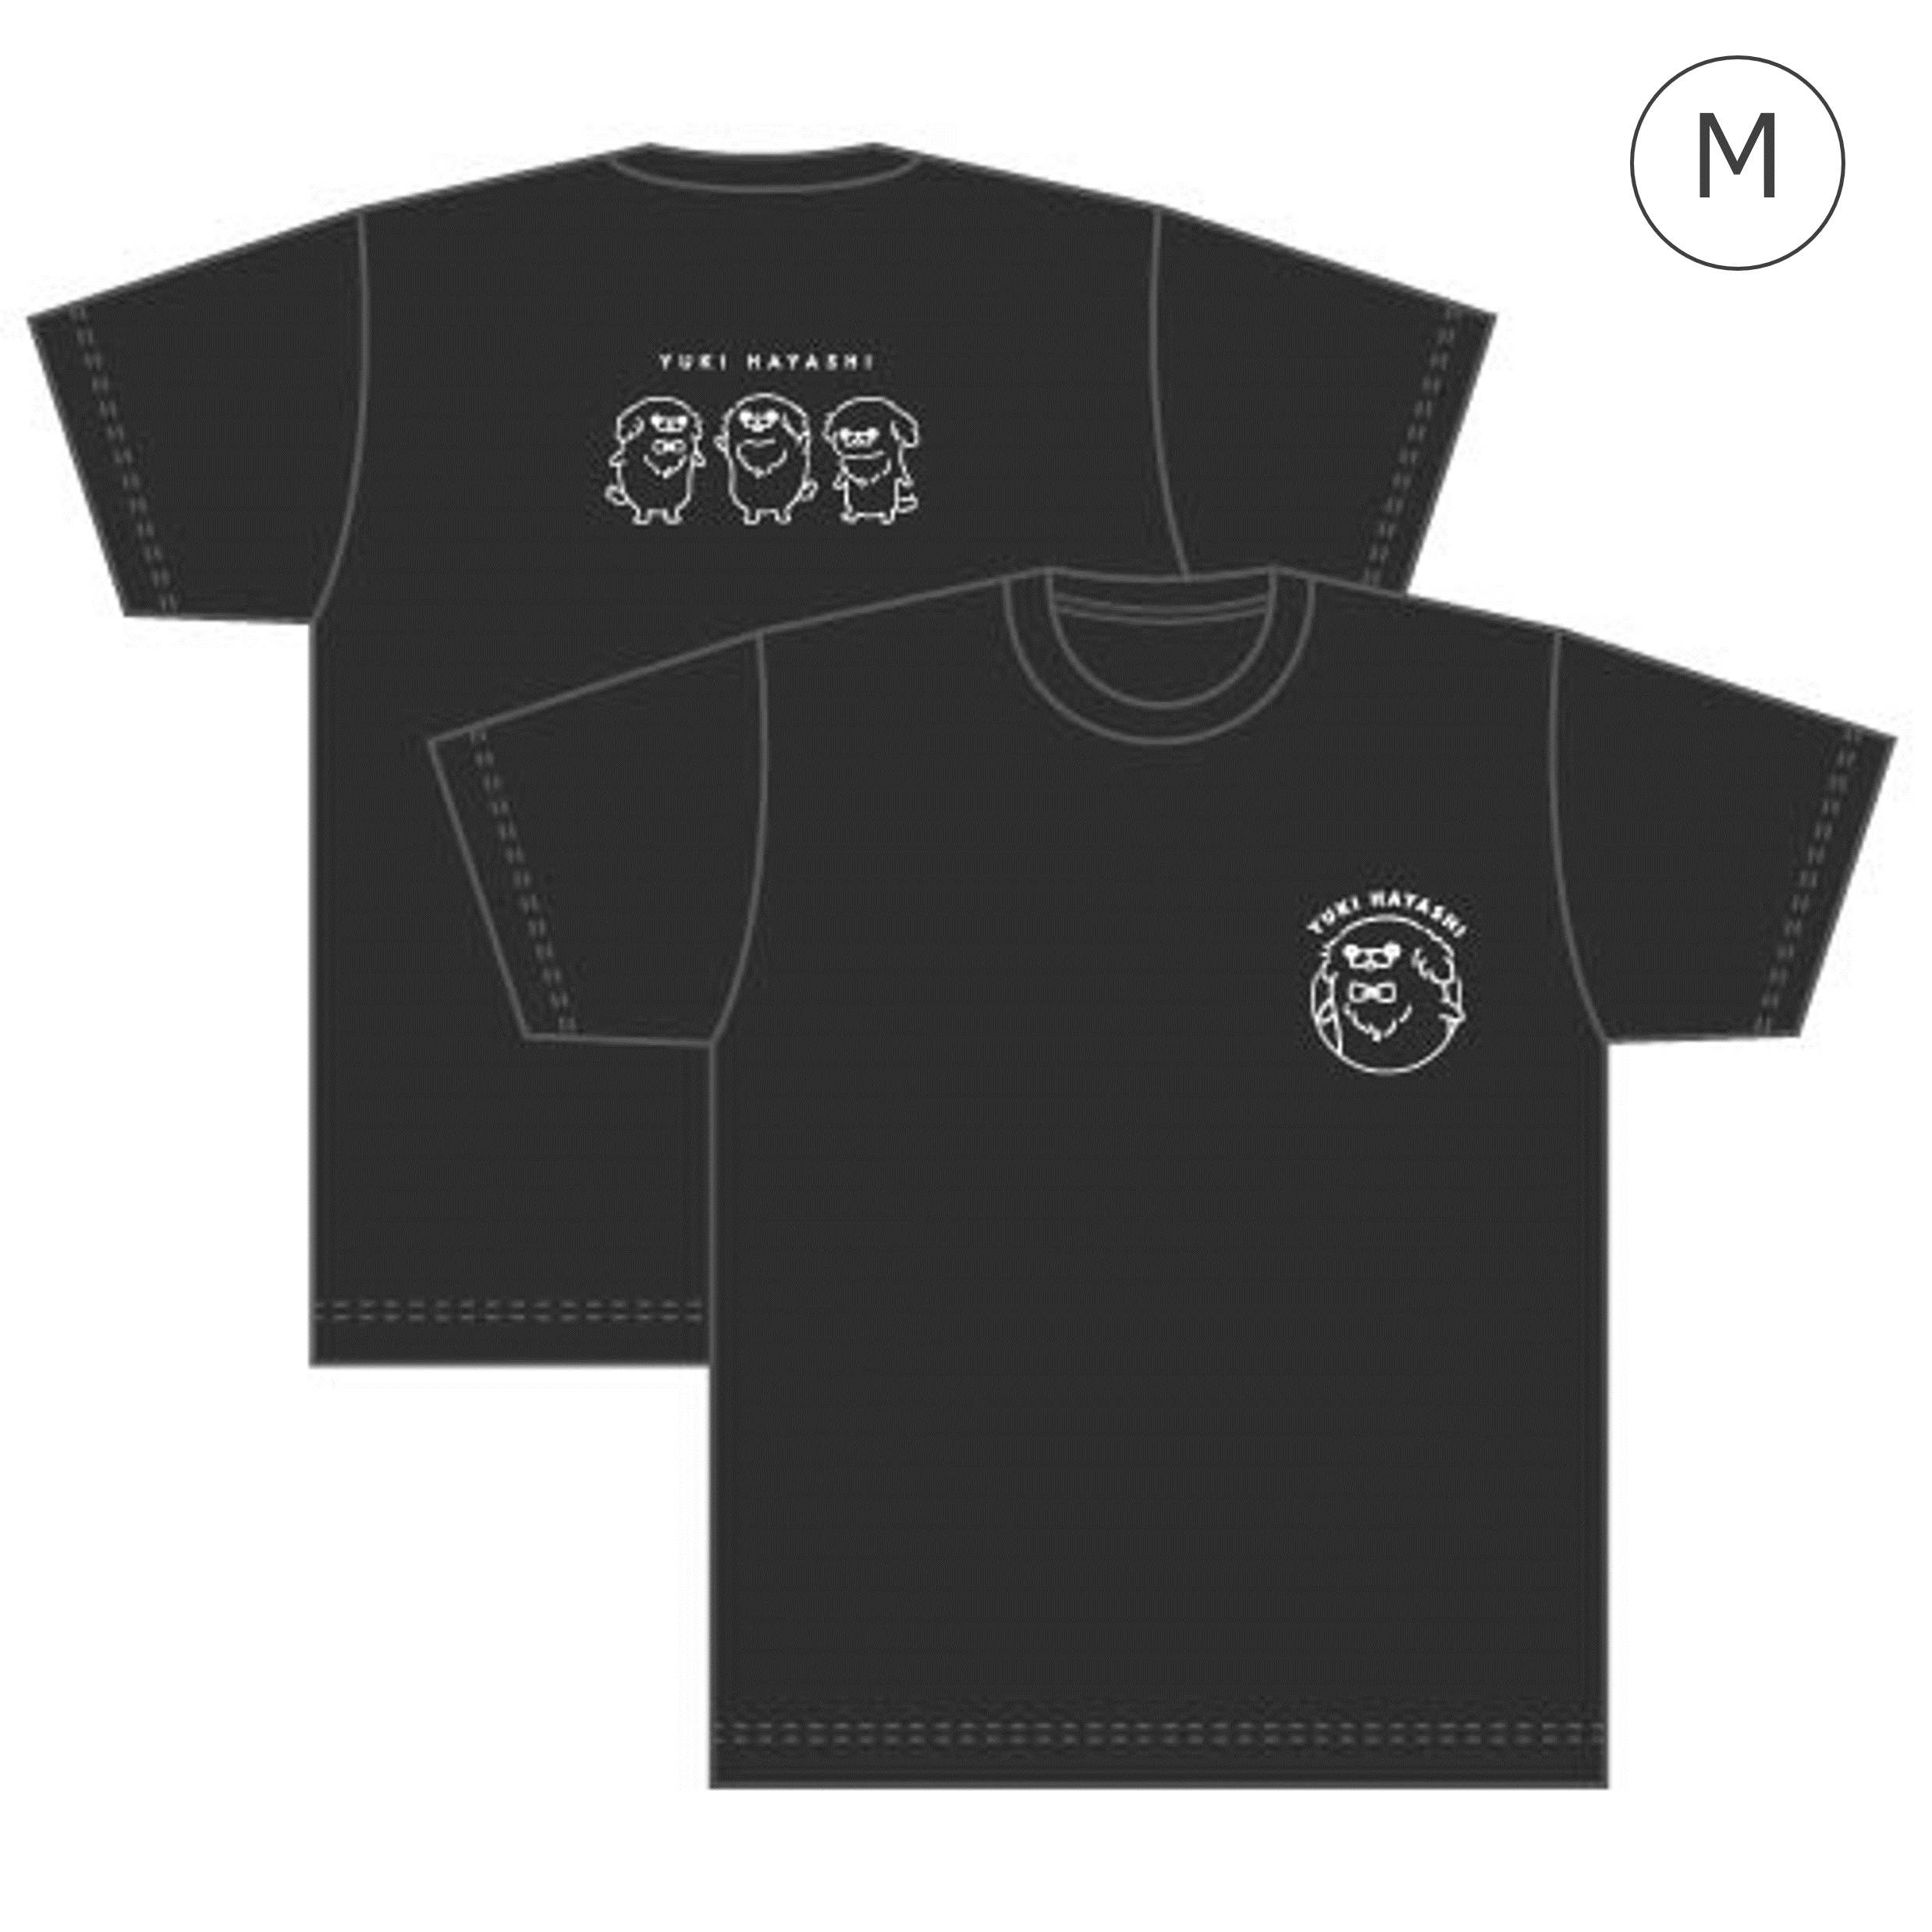 T-shirt (Black / Size M)